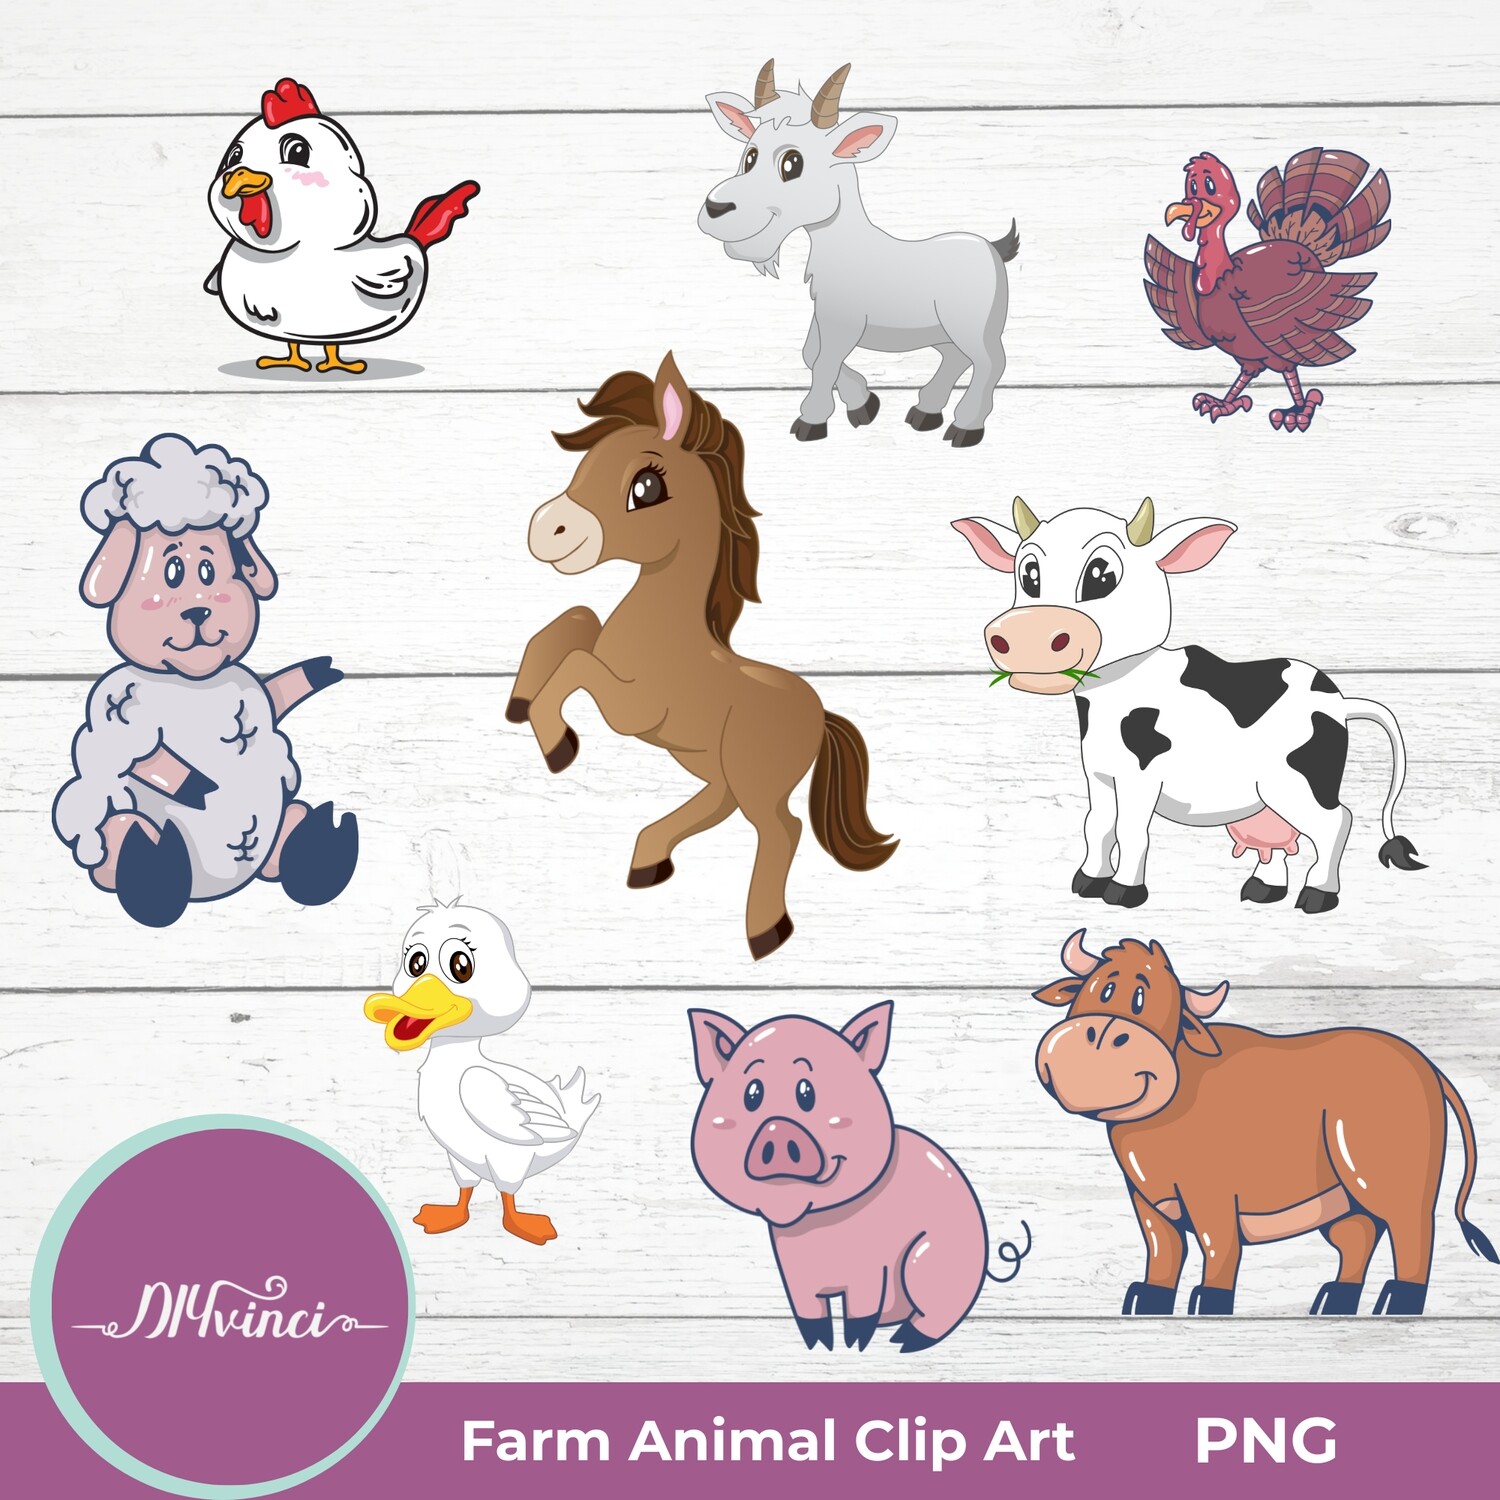 Cute Farm Animals Clip Art - 9 PNG - Personal & Commercial Use - Store -  DIYvinci